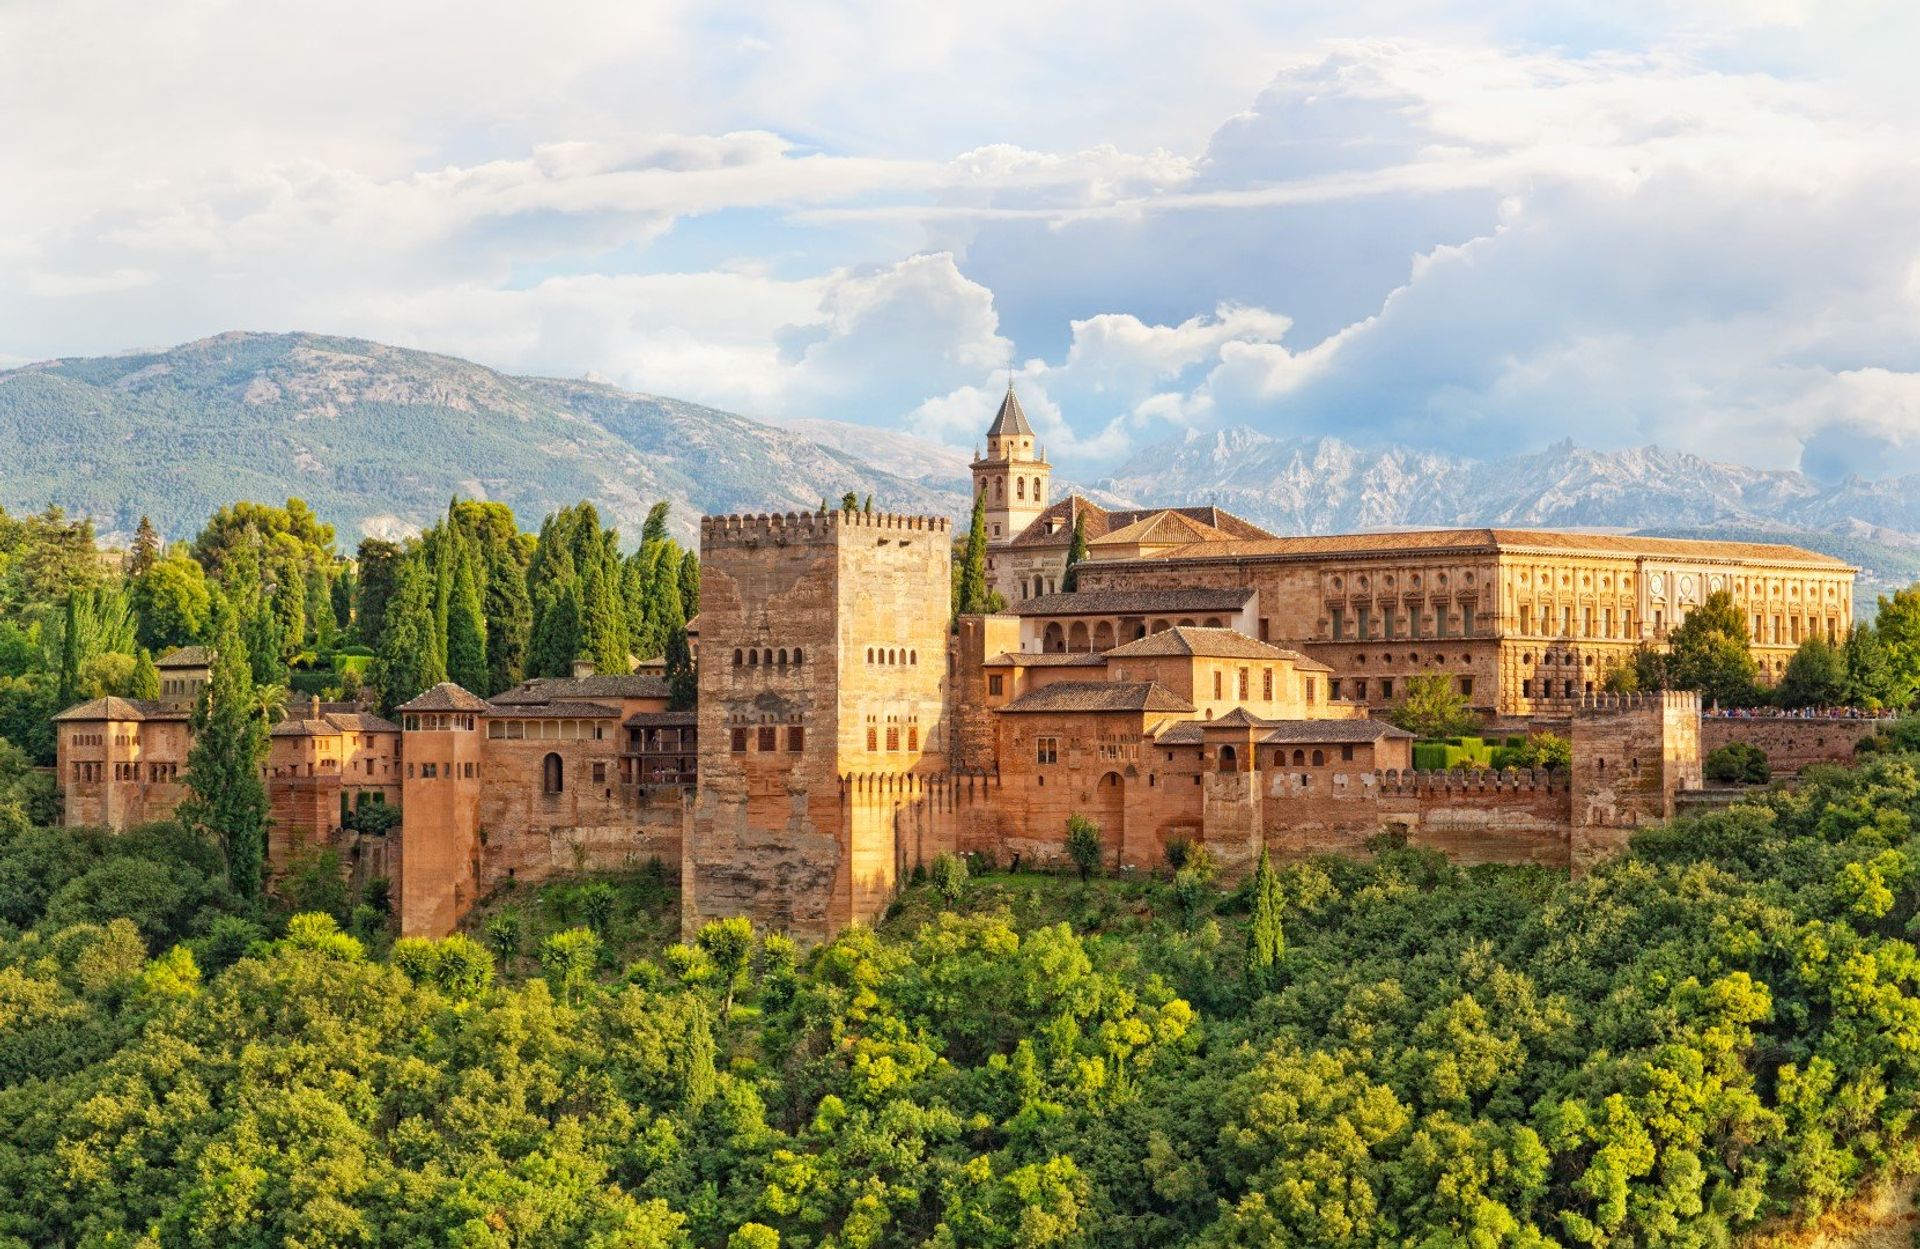 The UNESCO World Heritage Site of Alhambra, Granada